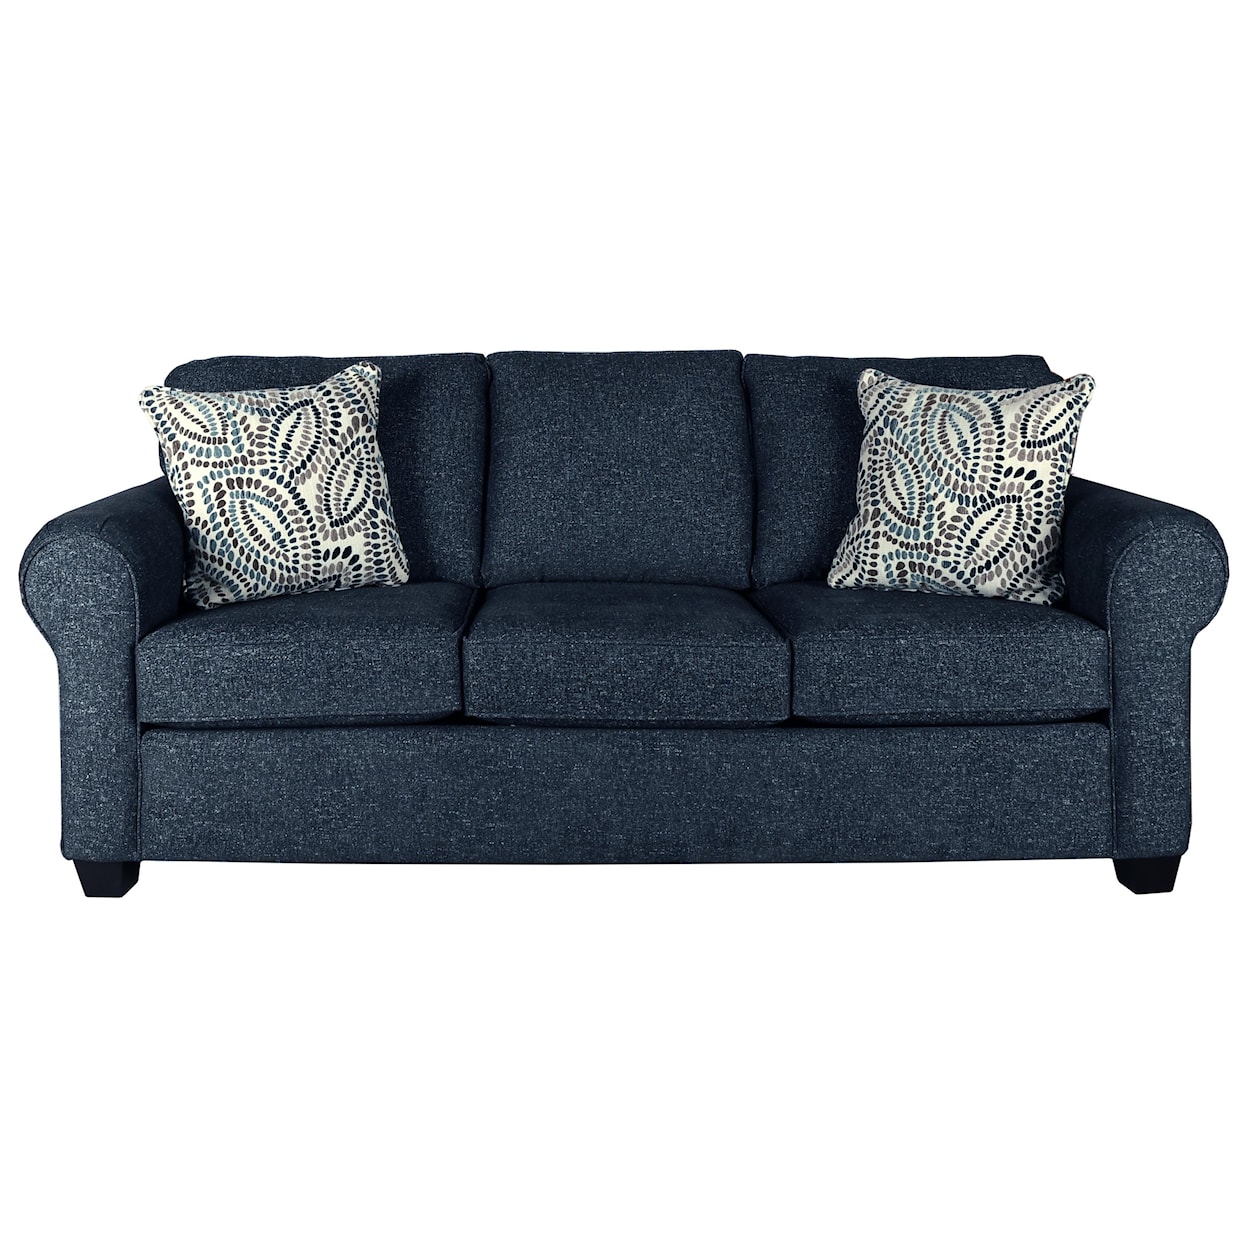 Taelor Designs Porter Sofa